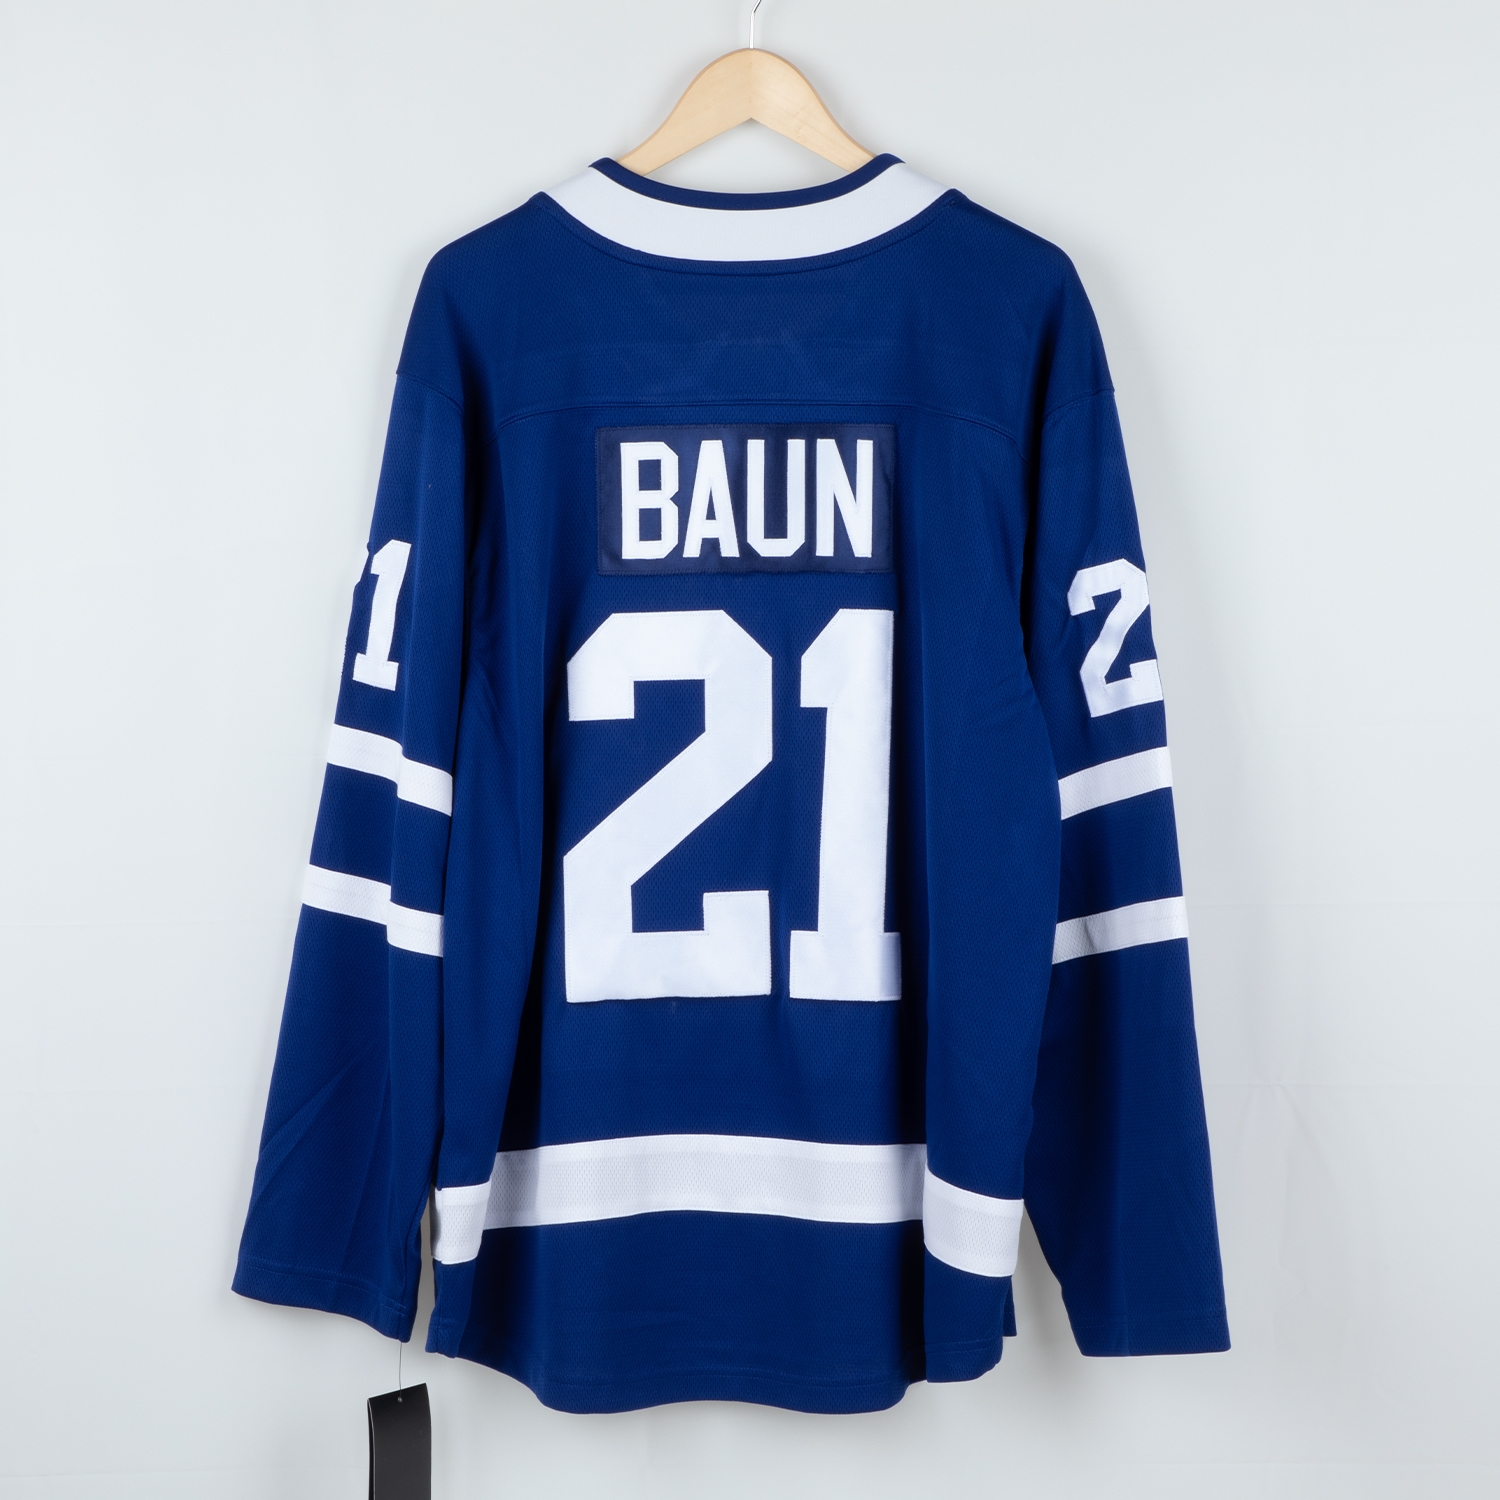 Bobby Baun Toronto Maple Leafs Fanatics Hockey Jersey - Size Large